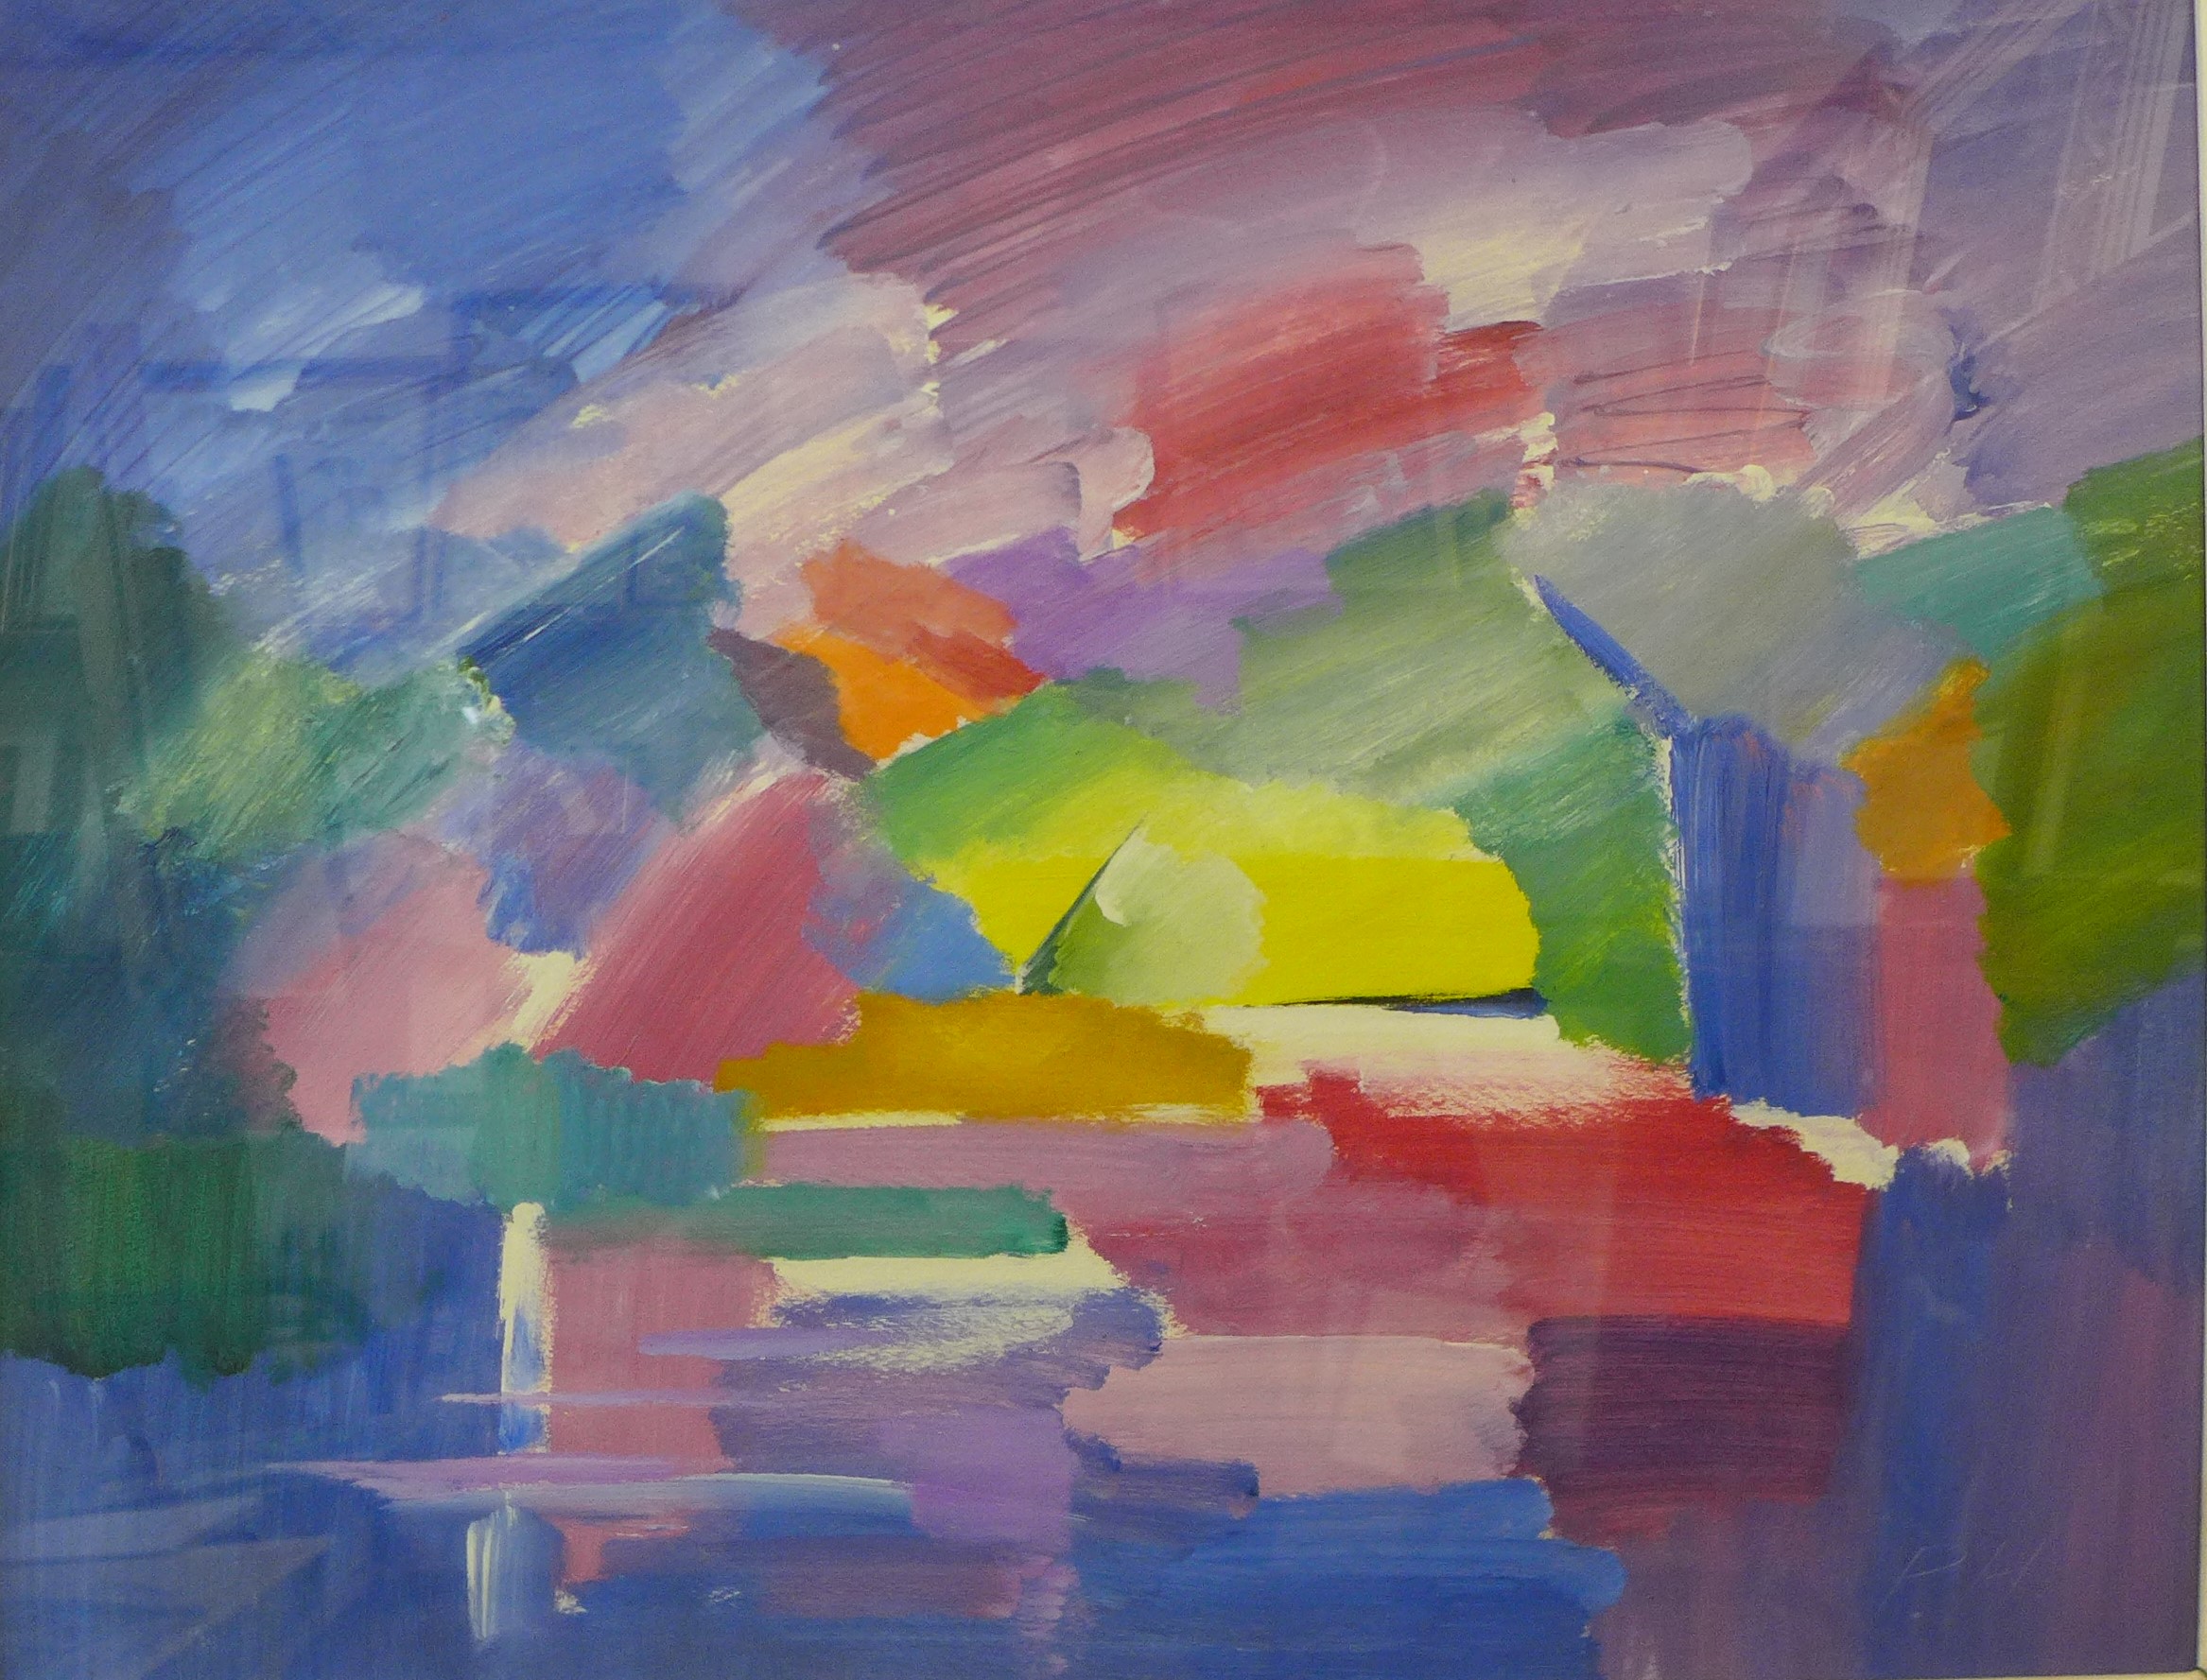 Peter Humphrey, abstract, mixed media, 53 x 69cms, framed